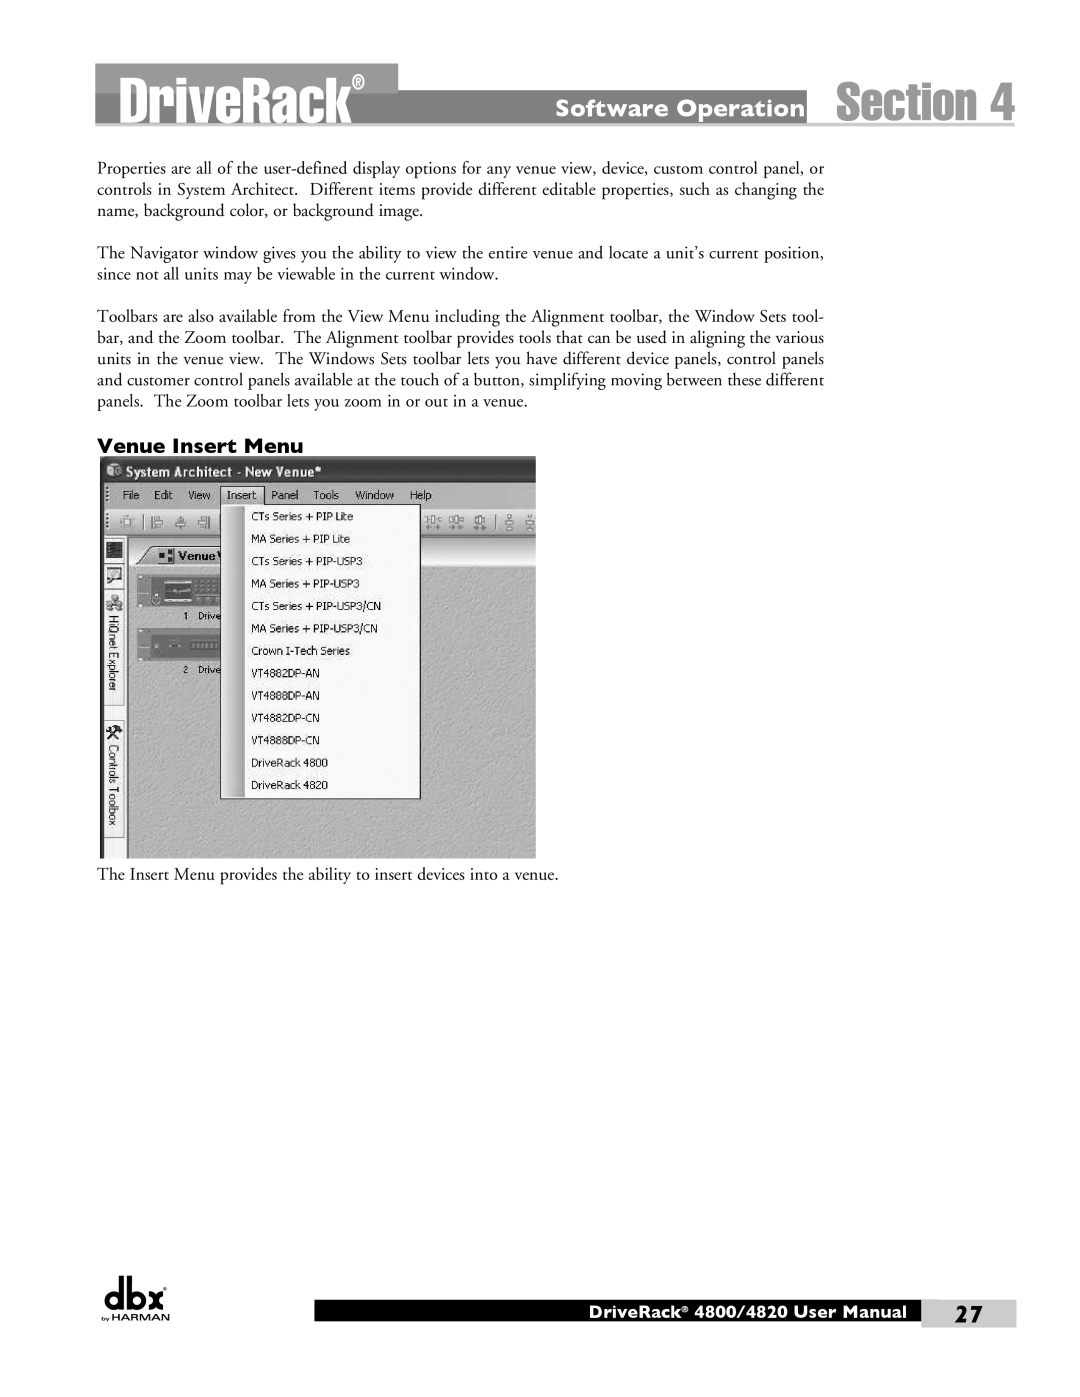 Harman user manual Venue Insert Menu, DriveRack 4800/4820 User Manual 